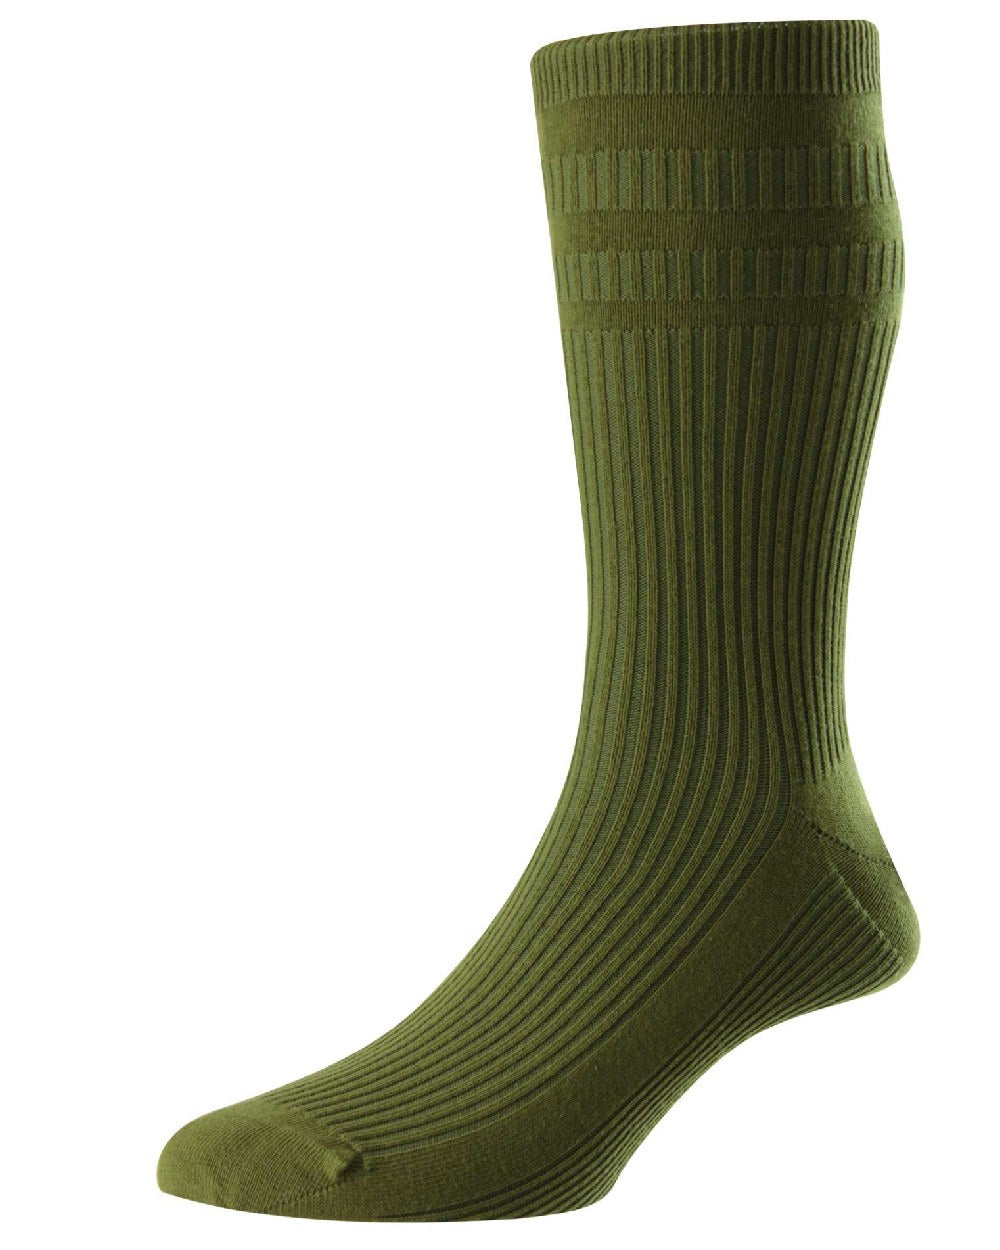 HJ Hall Original Cotton Soft Top Socks in Leaf Green 